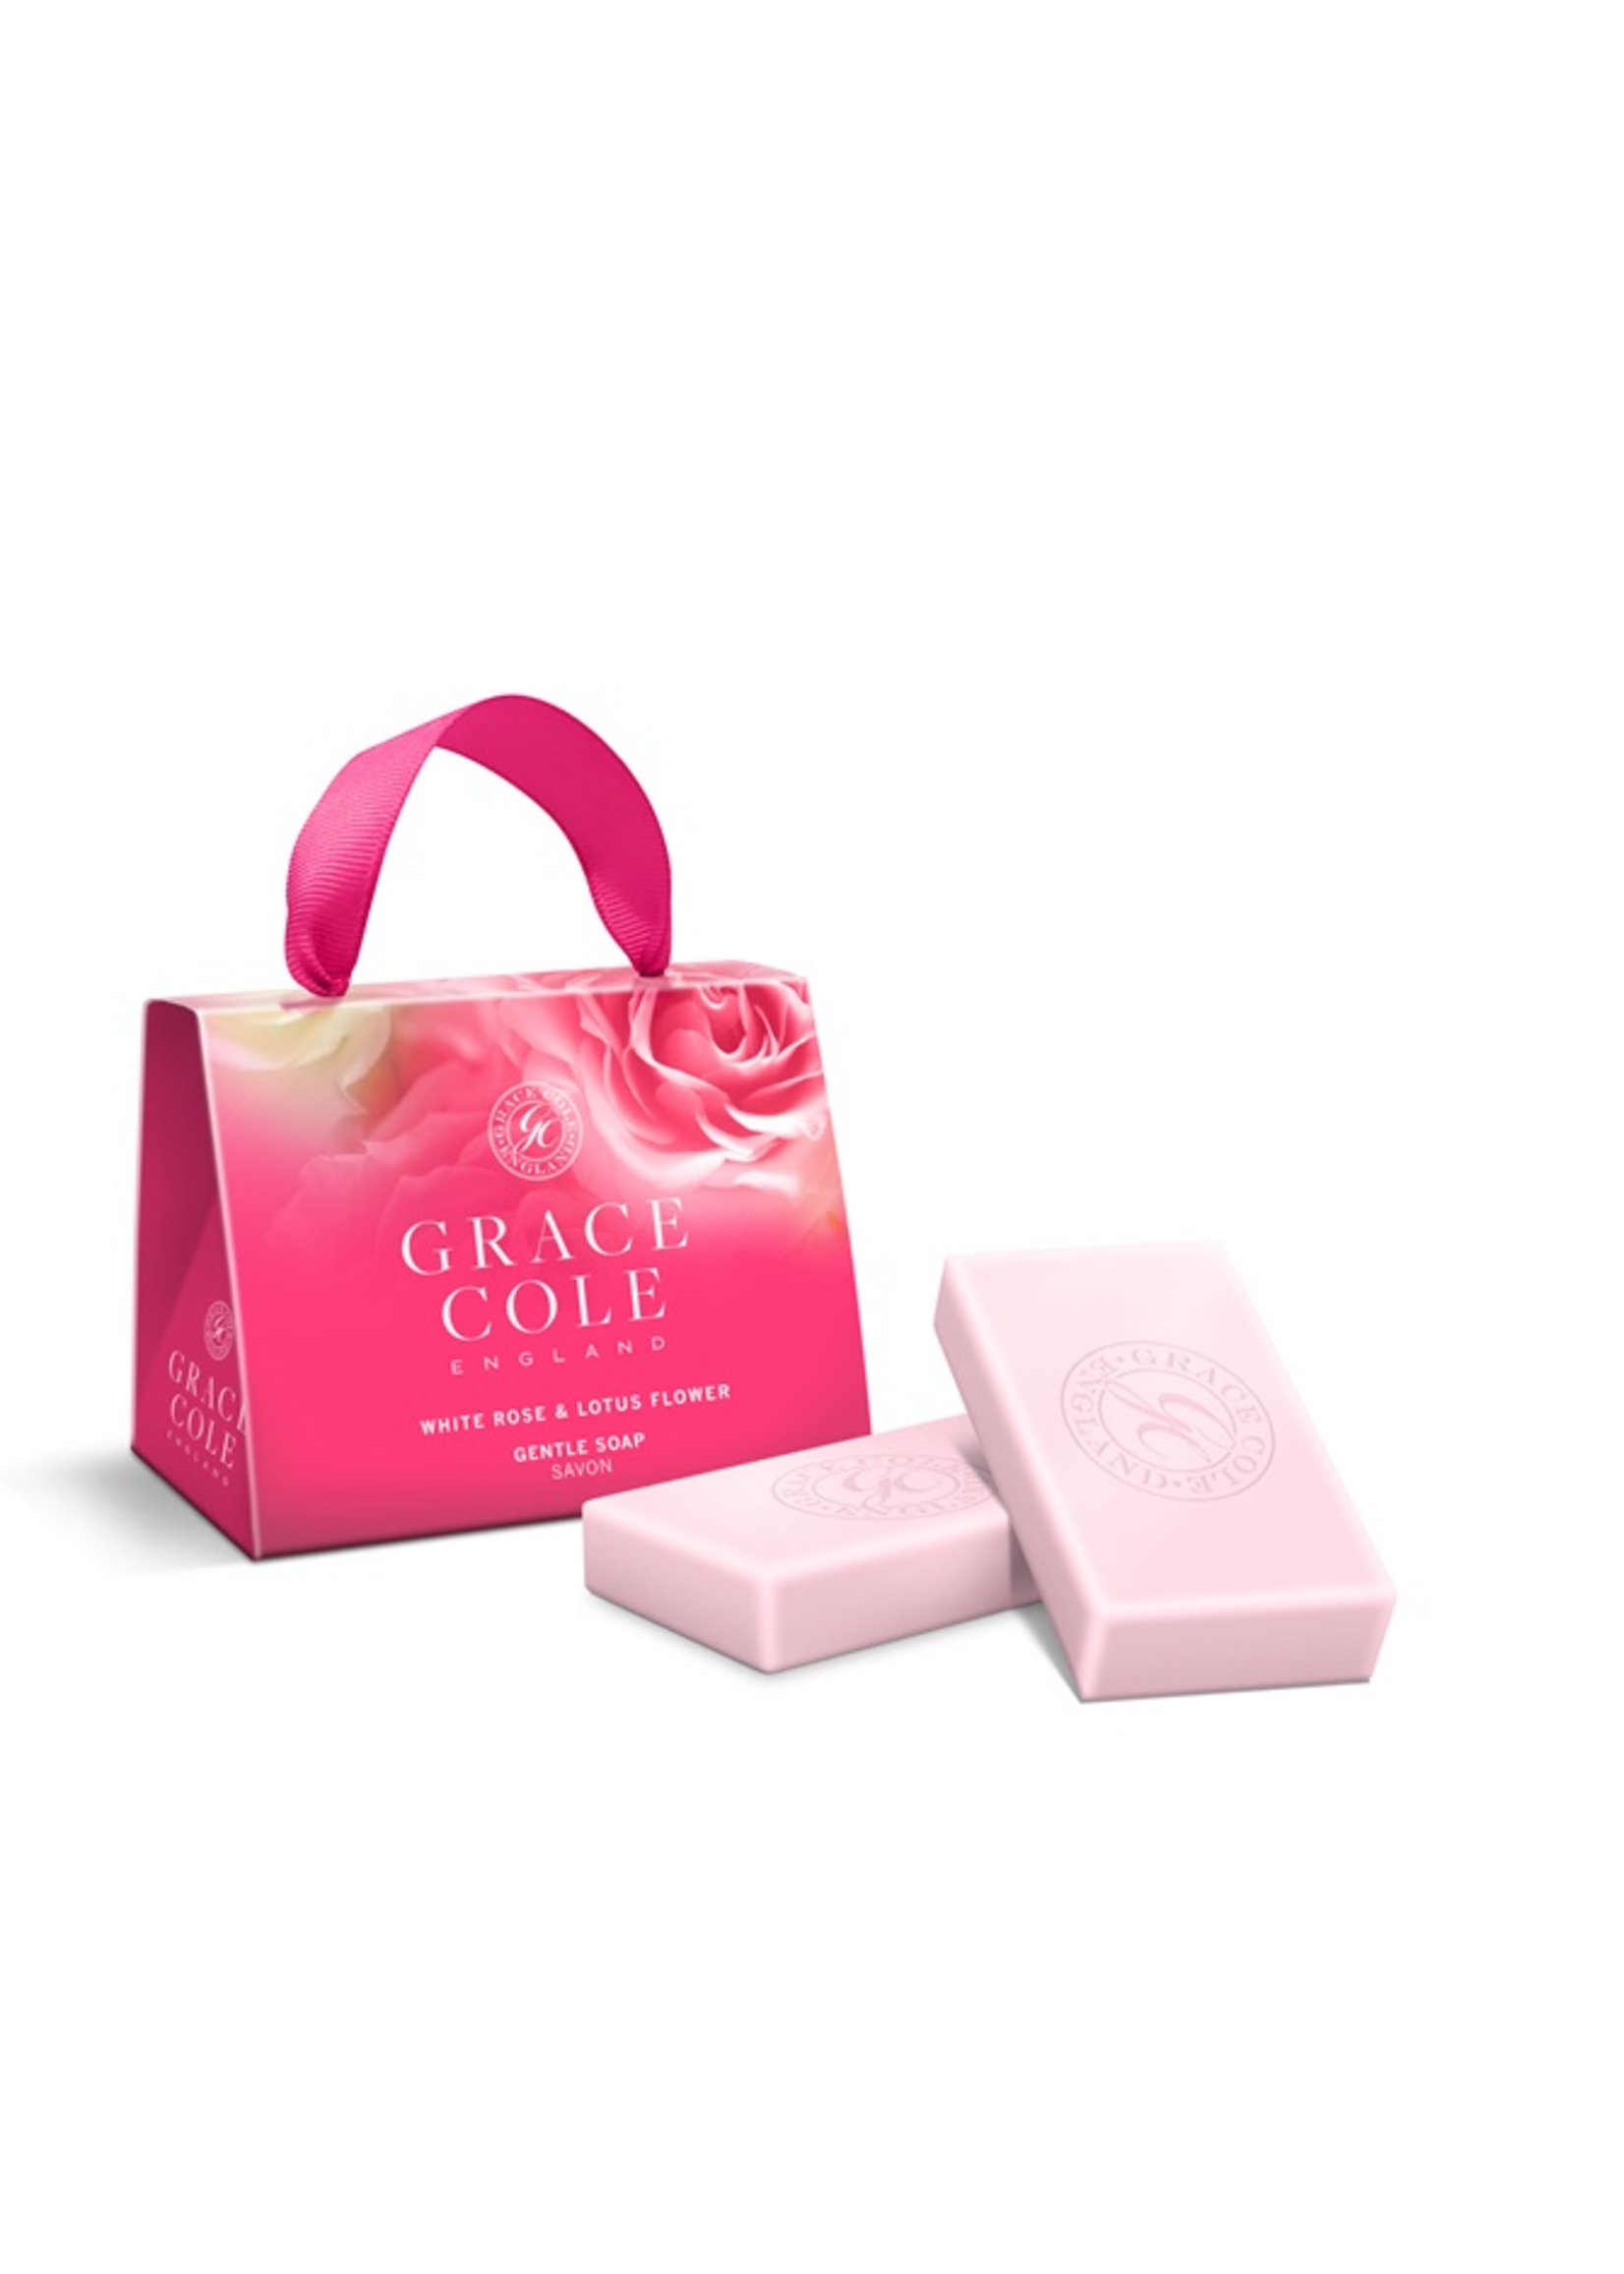 Grace Cole Handbag with soap White Rose & Lotus Flower